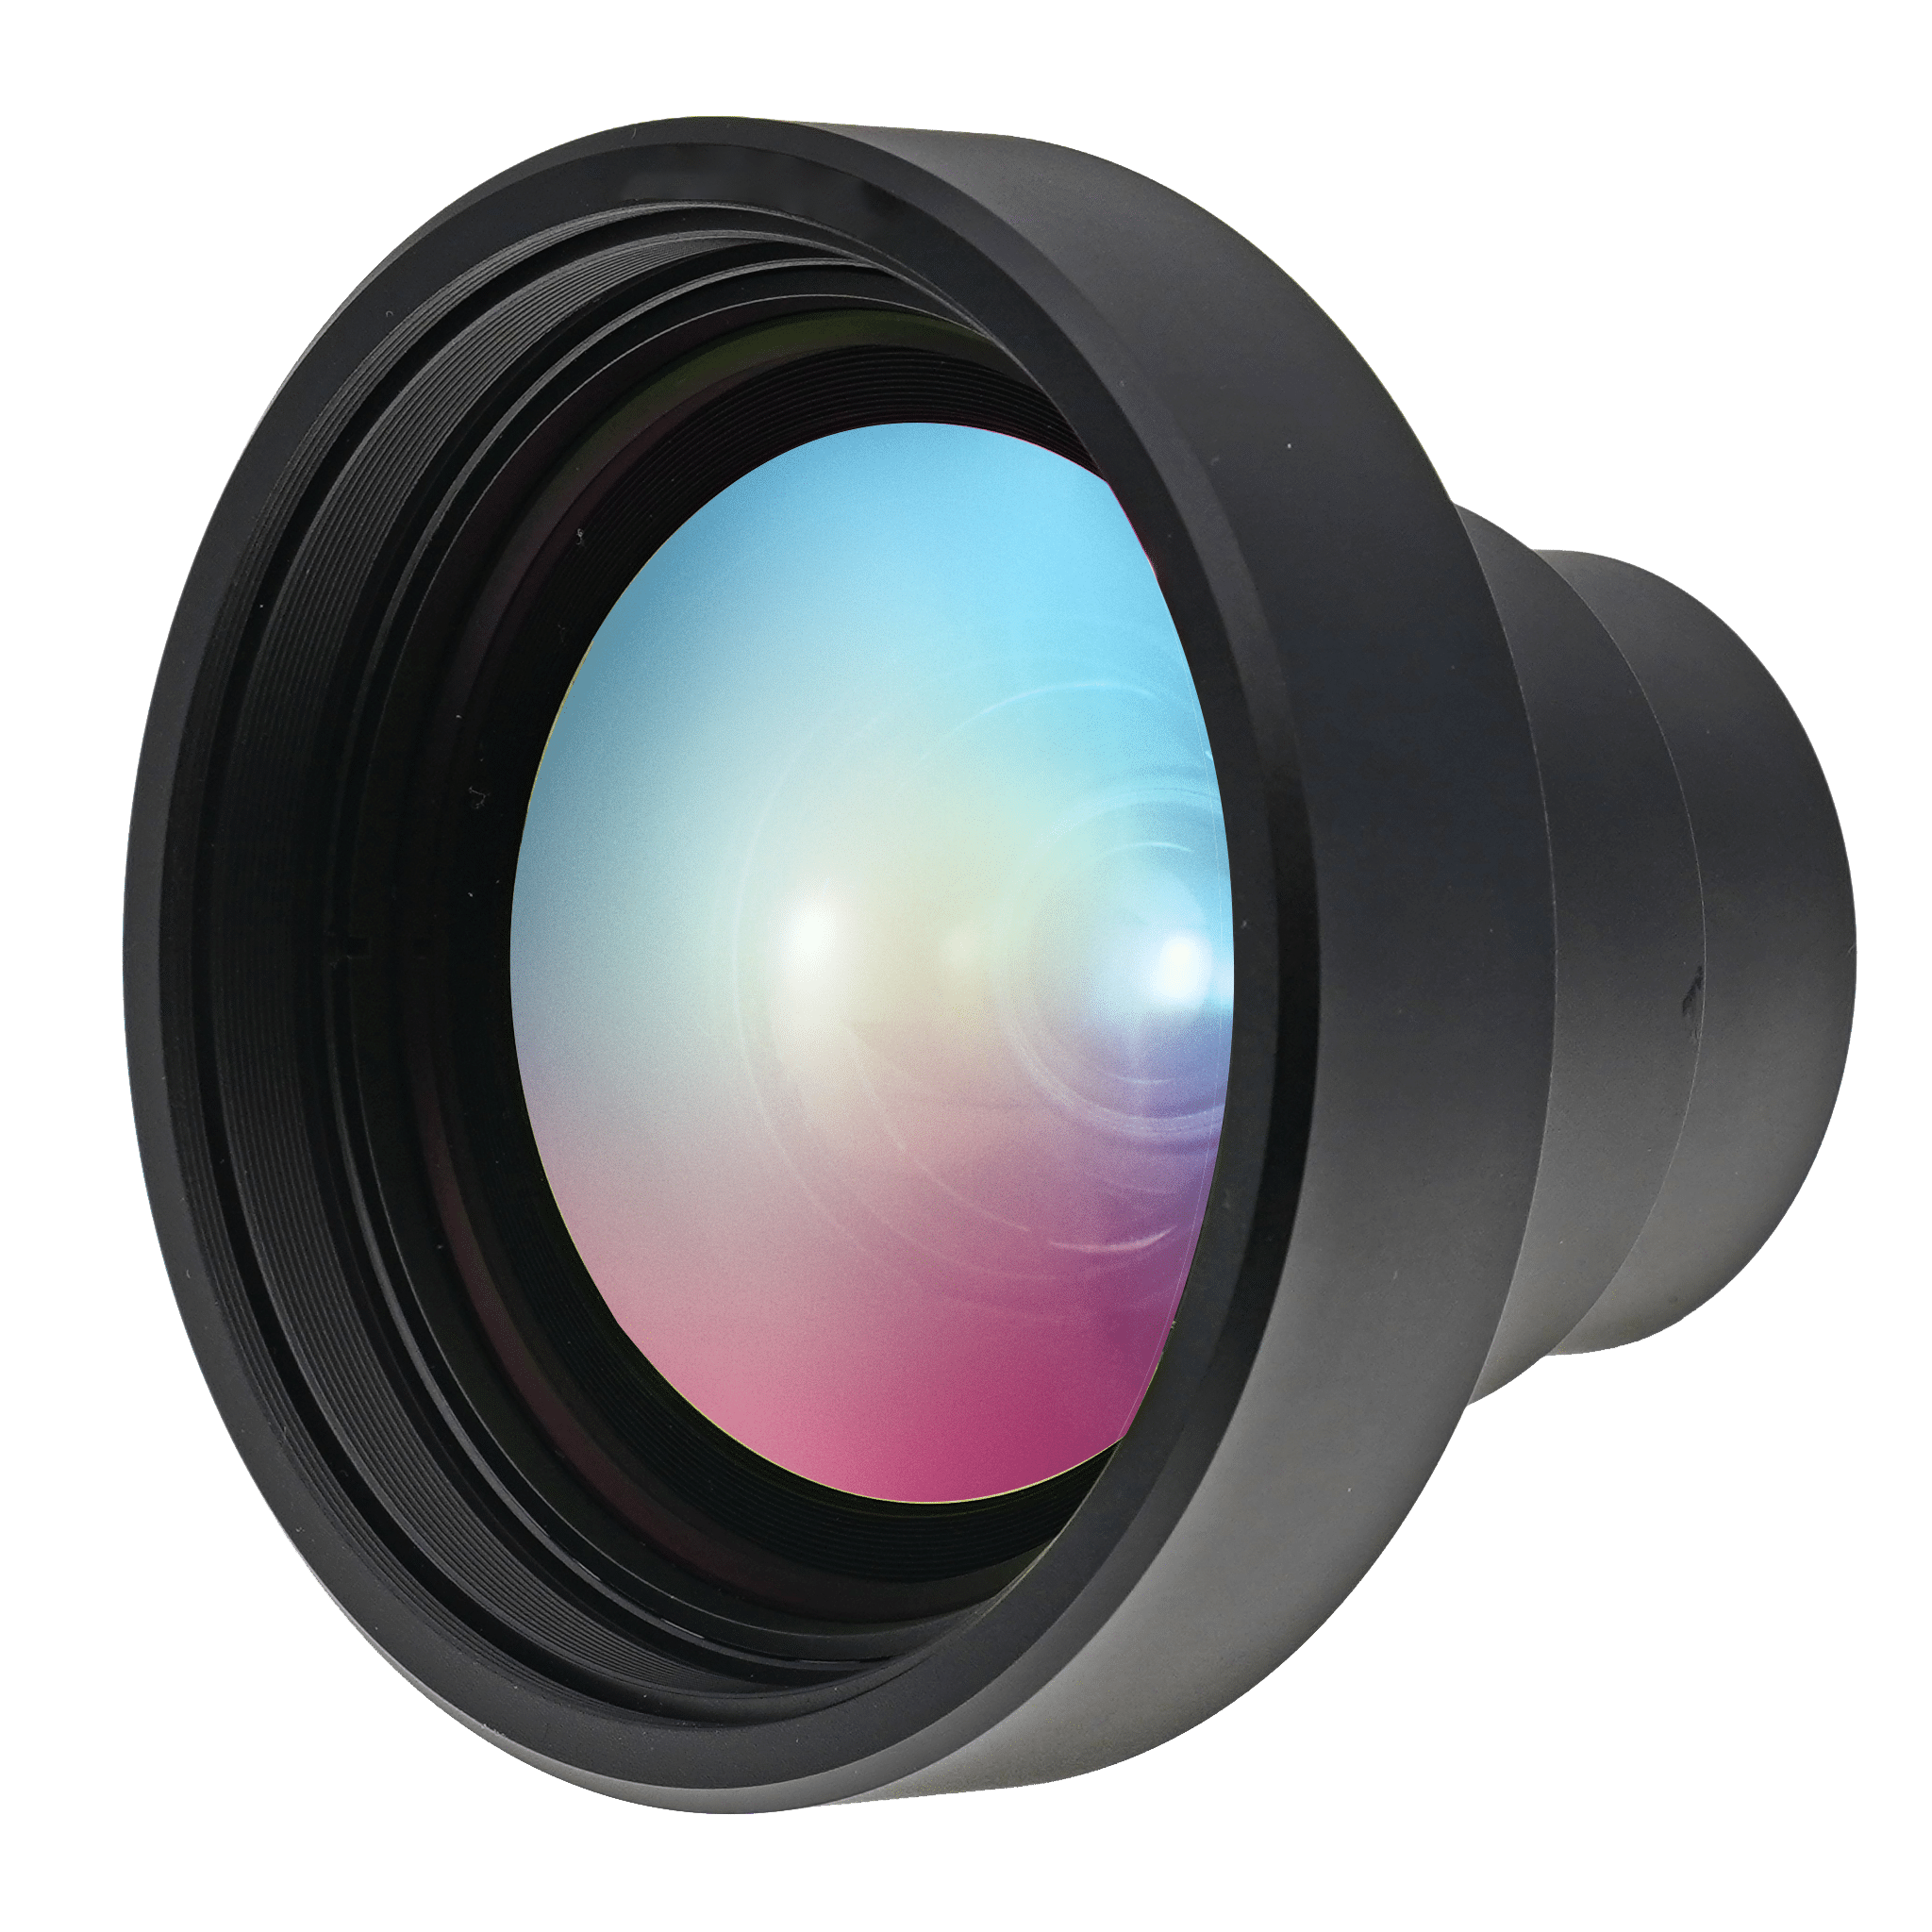 Viper P1280 and P640 portable thermal camera - ultra telephoto lens